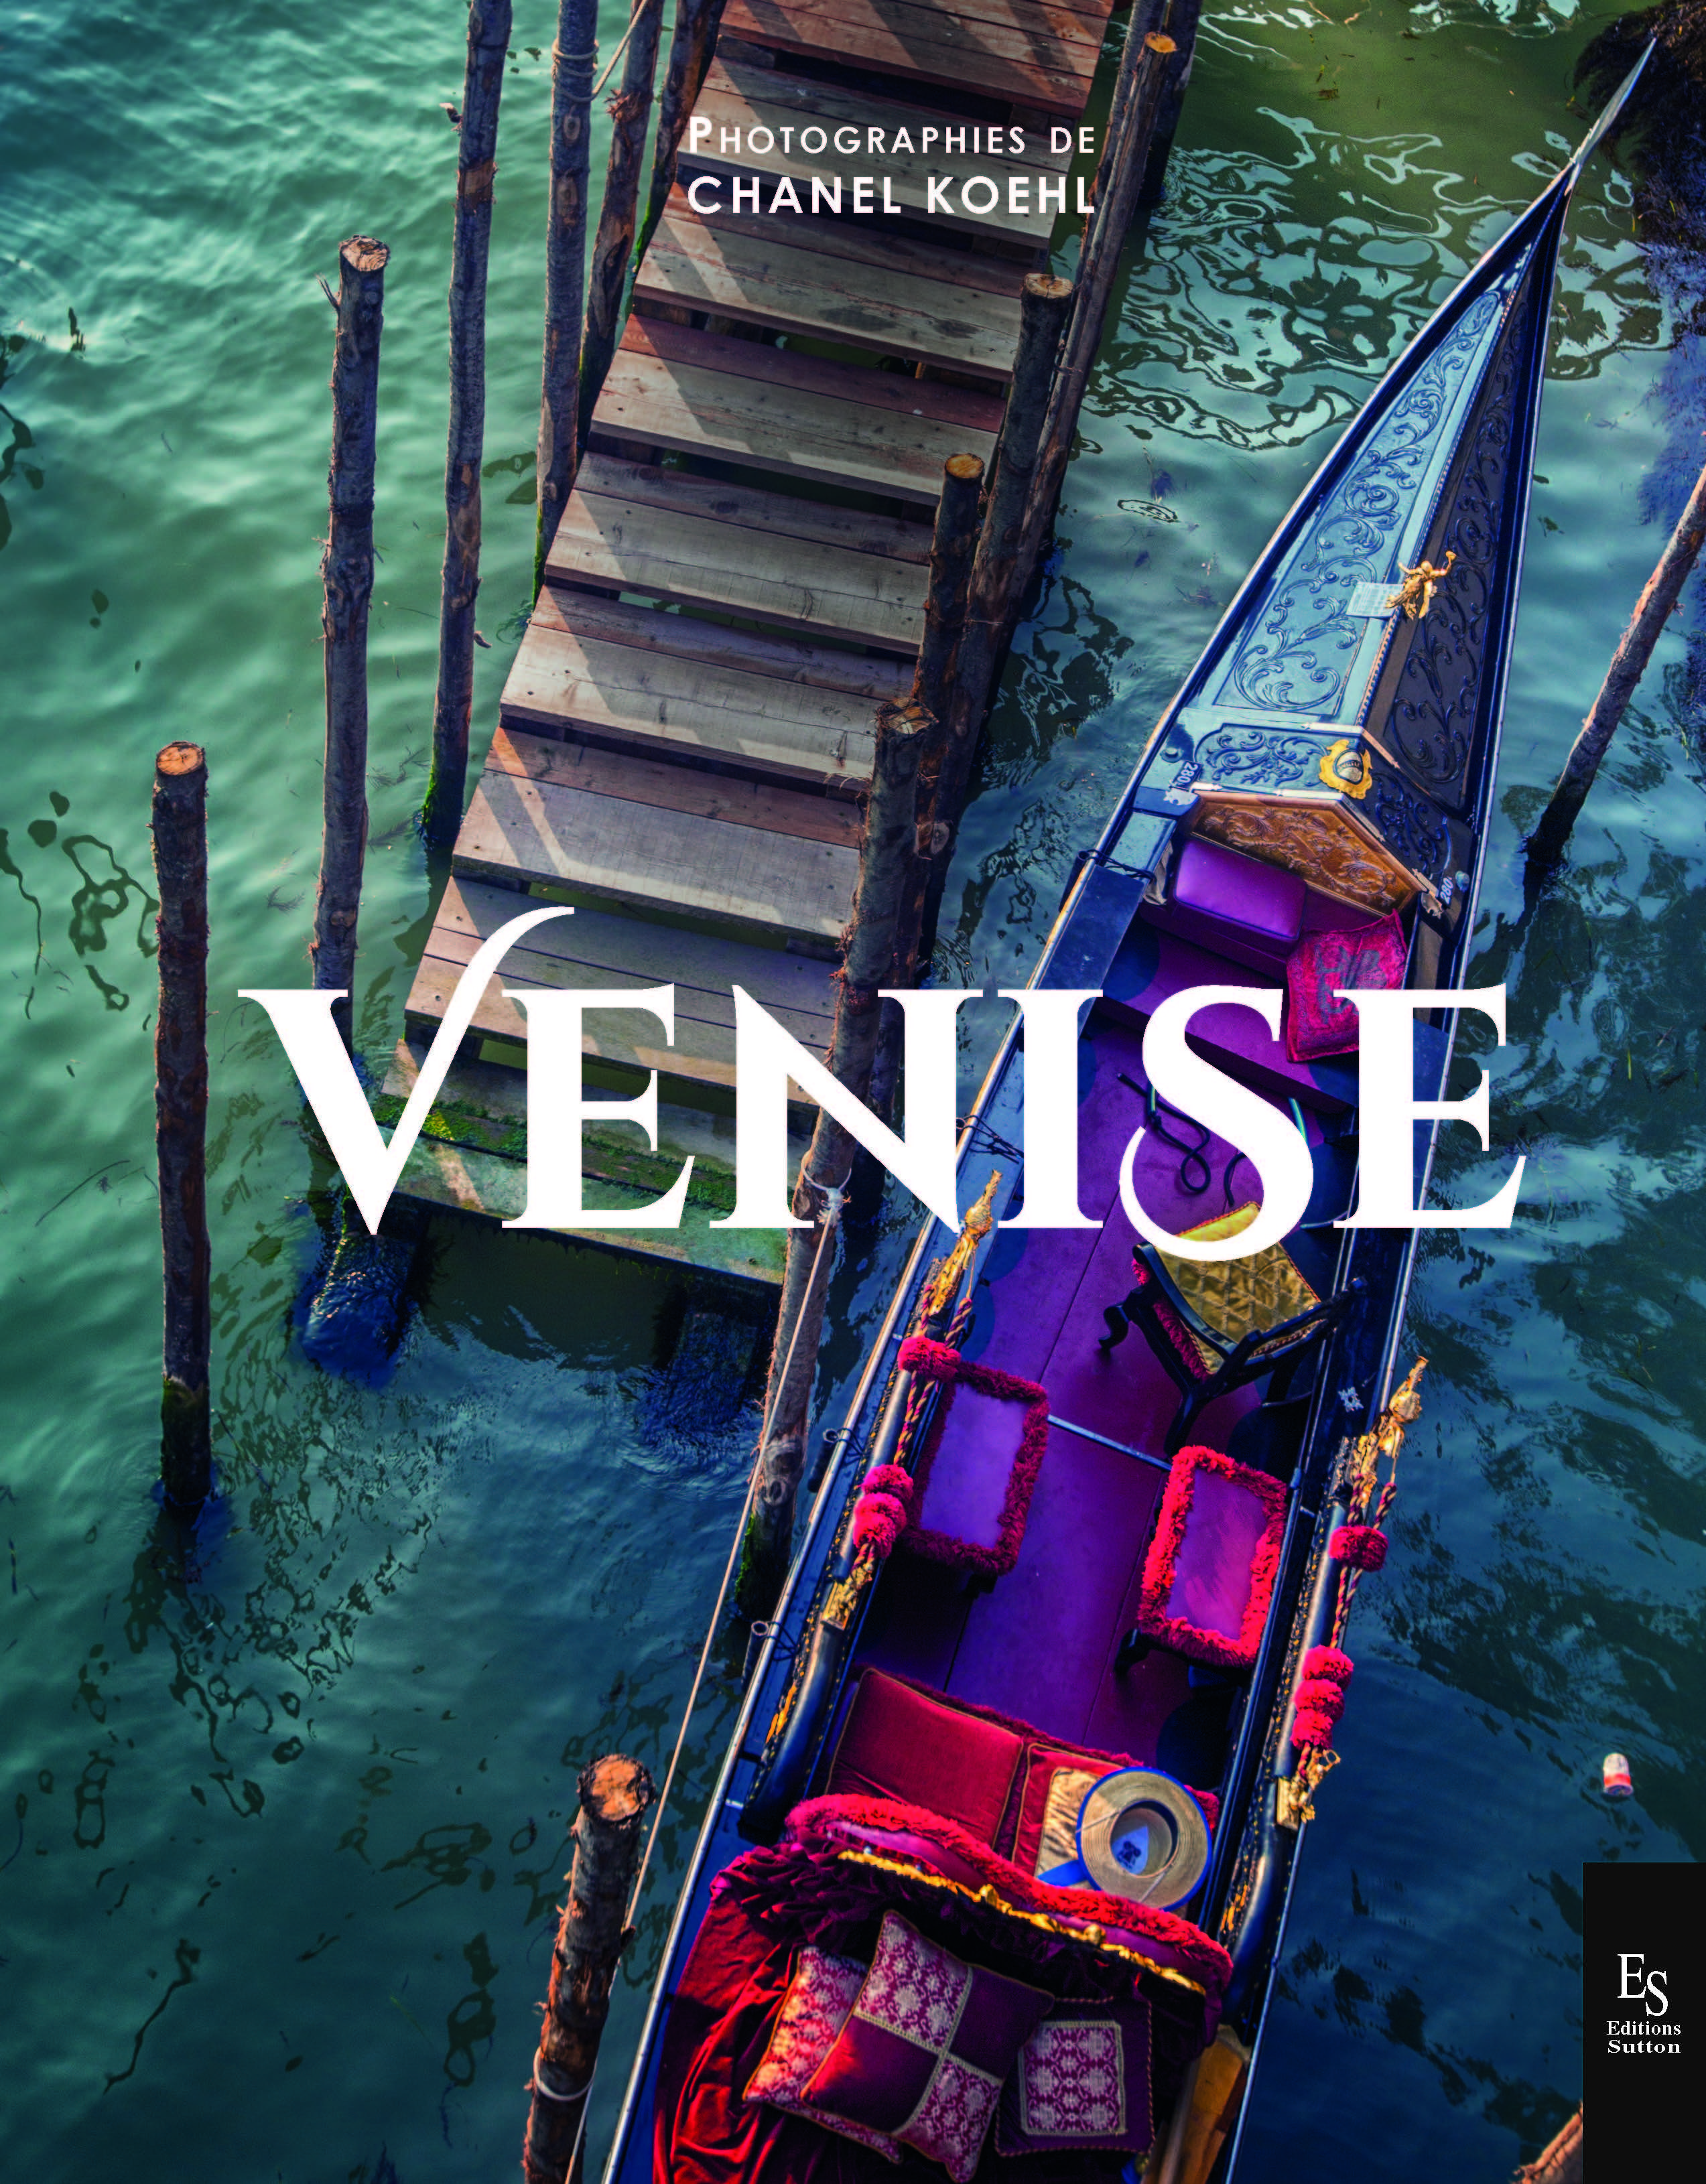 Venise (9782813811288-front-cover)